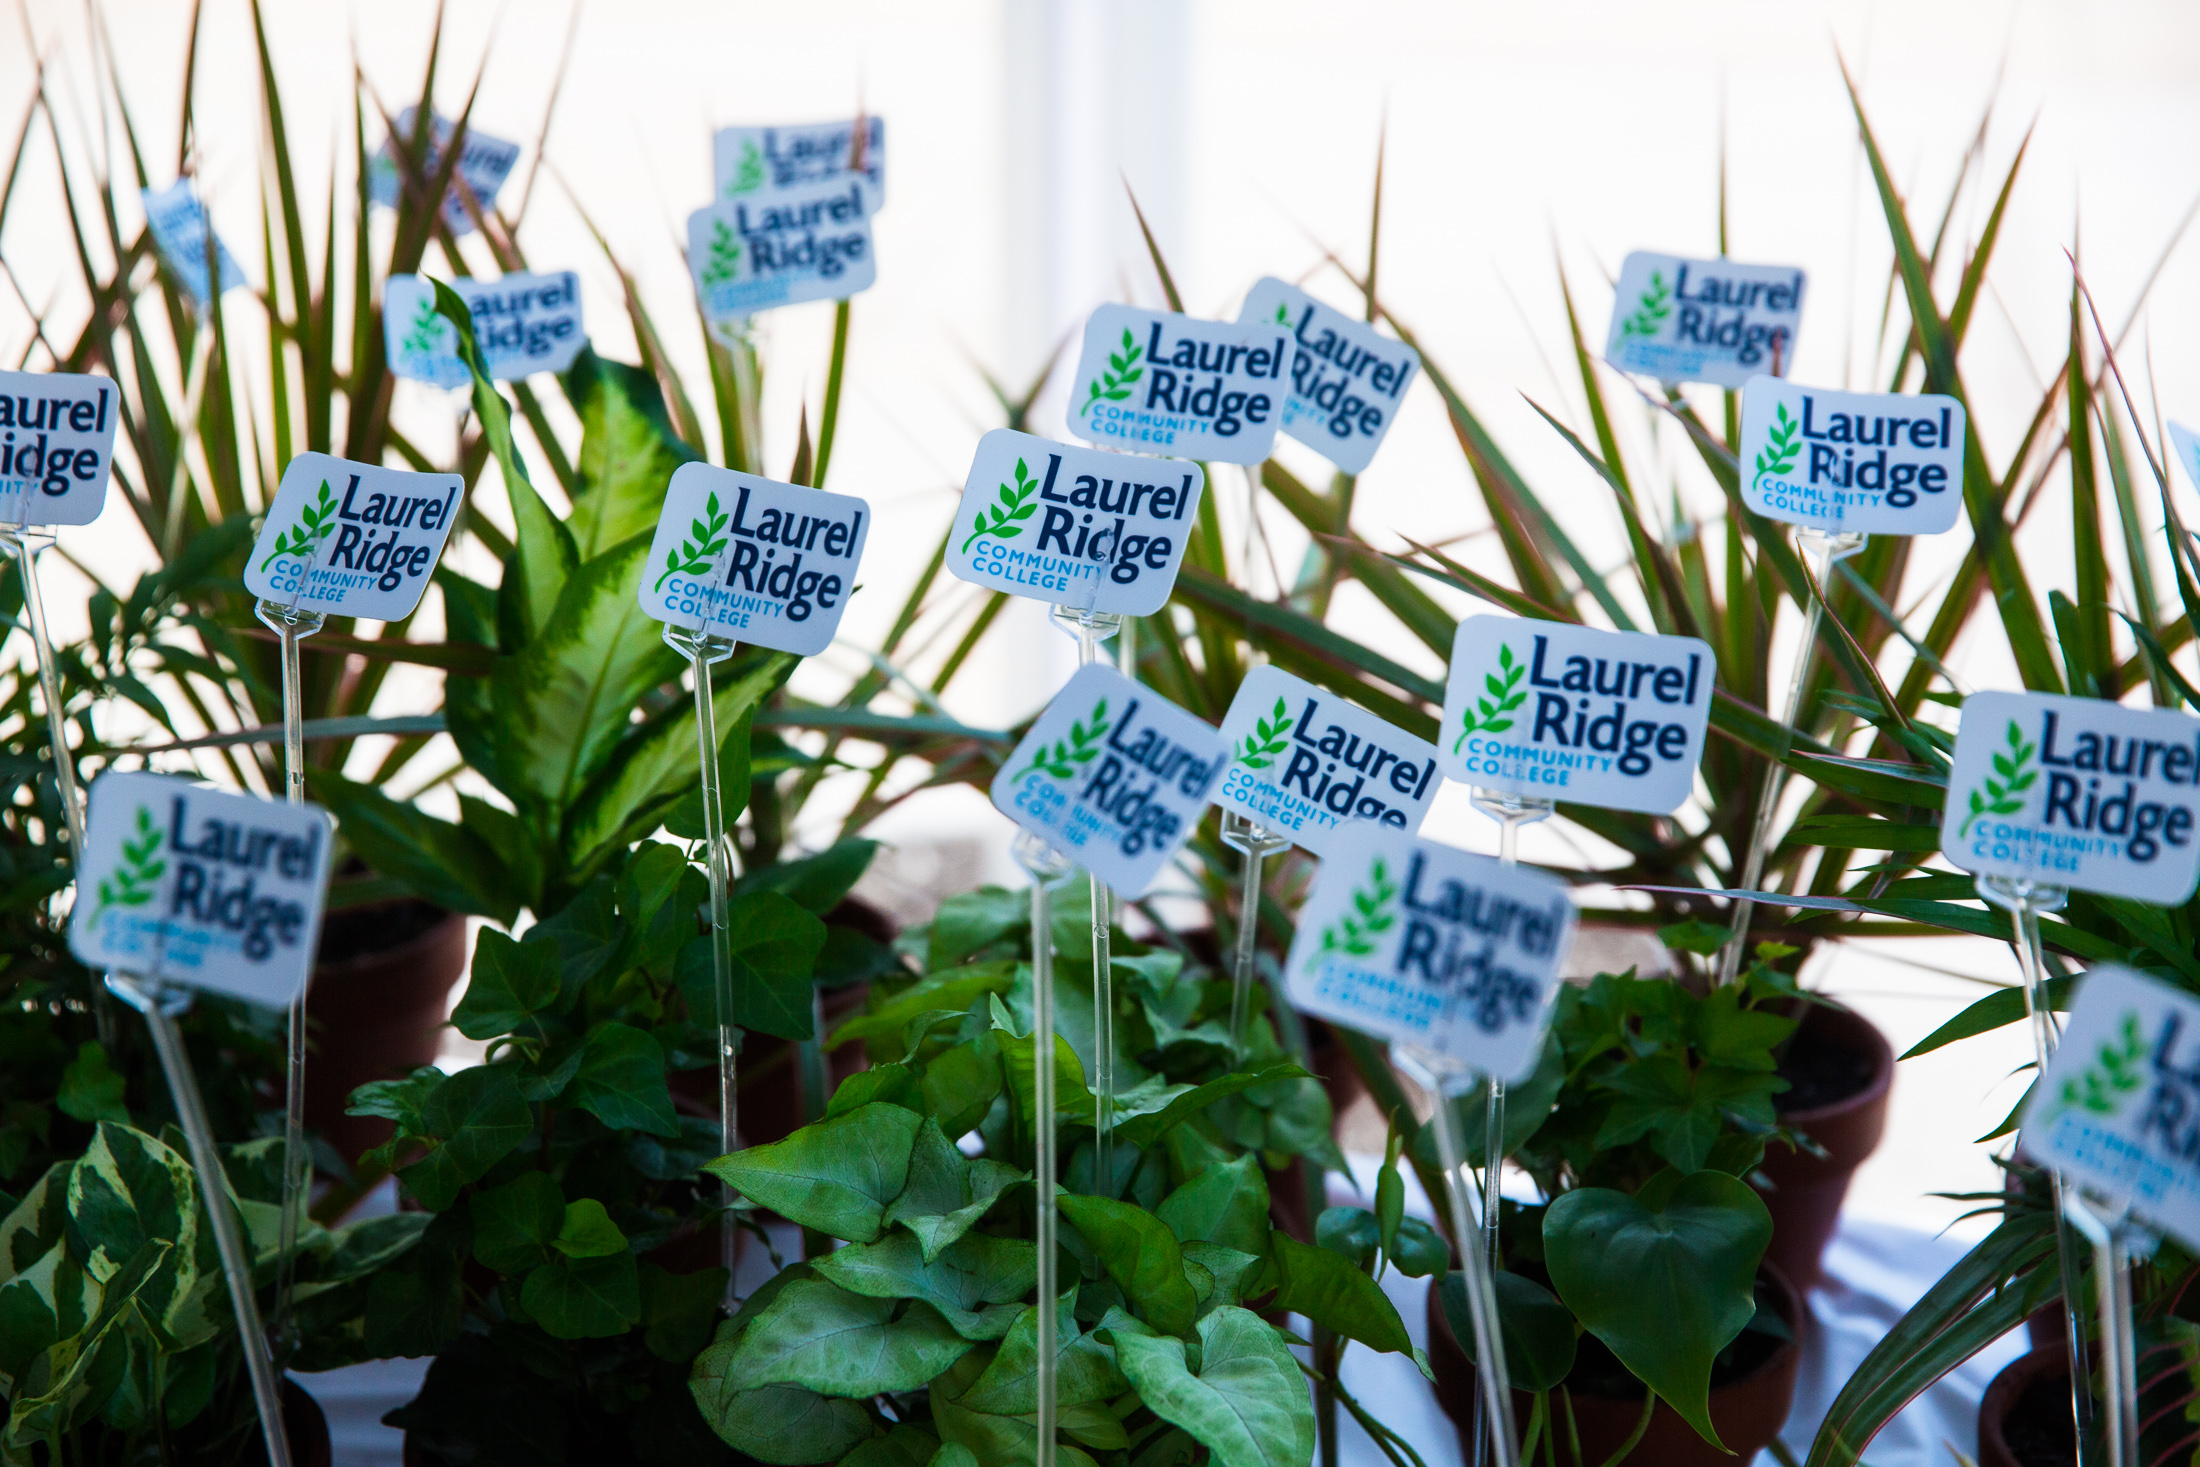 Plants with Laurel Ridge tags